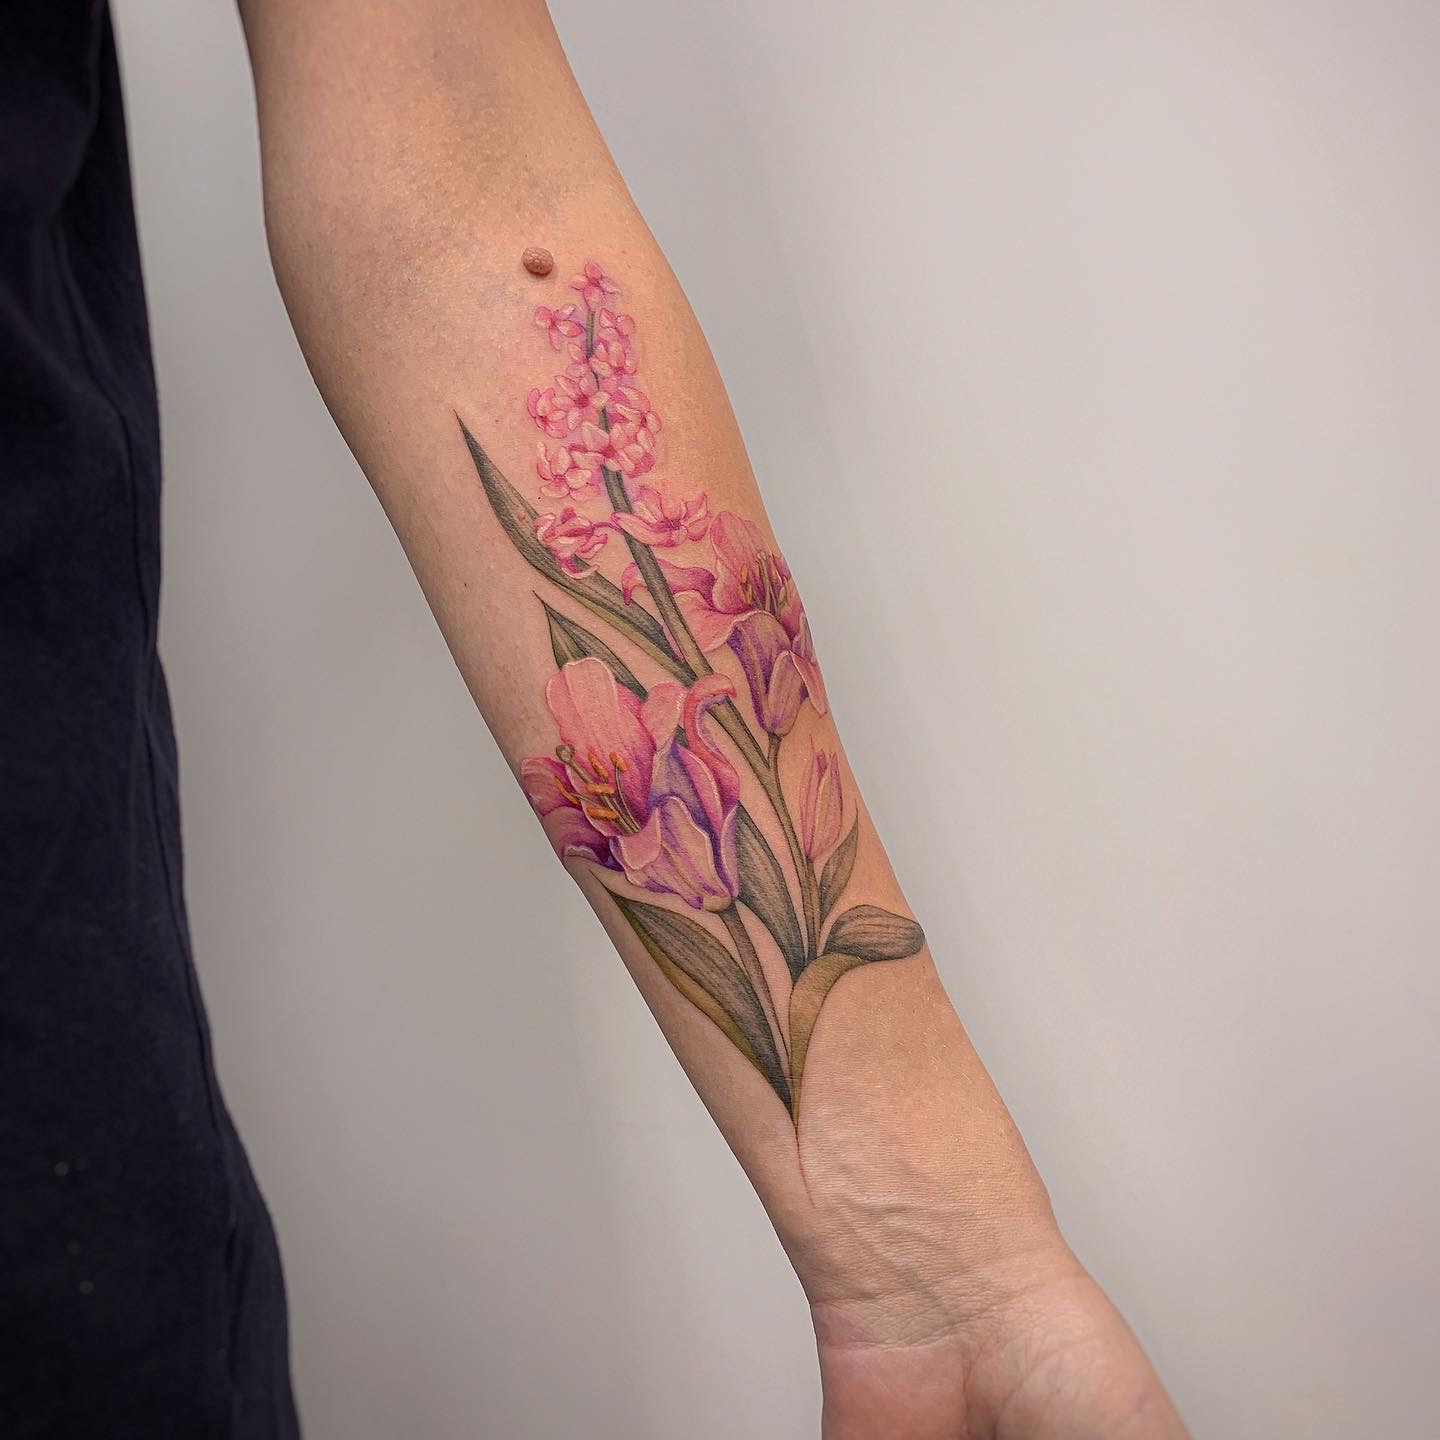 Stunning Arm Tattoo Designs for Women